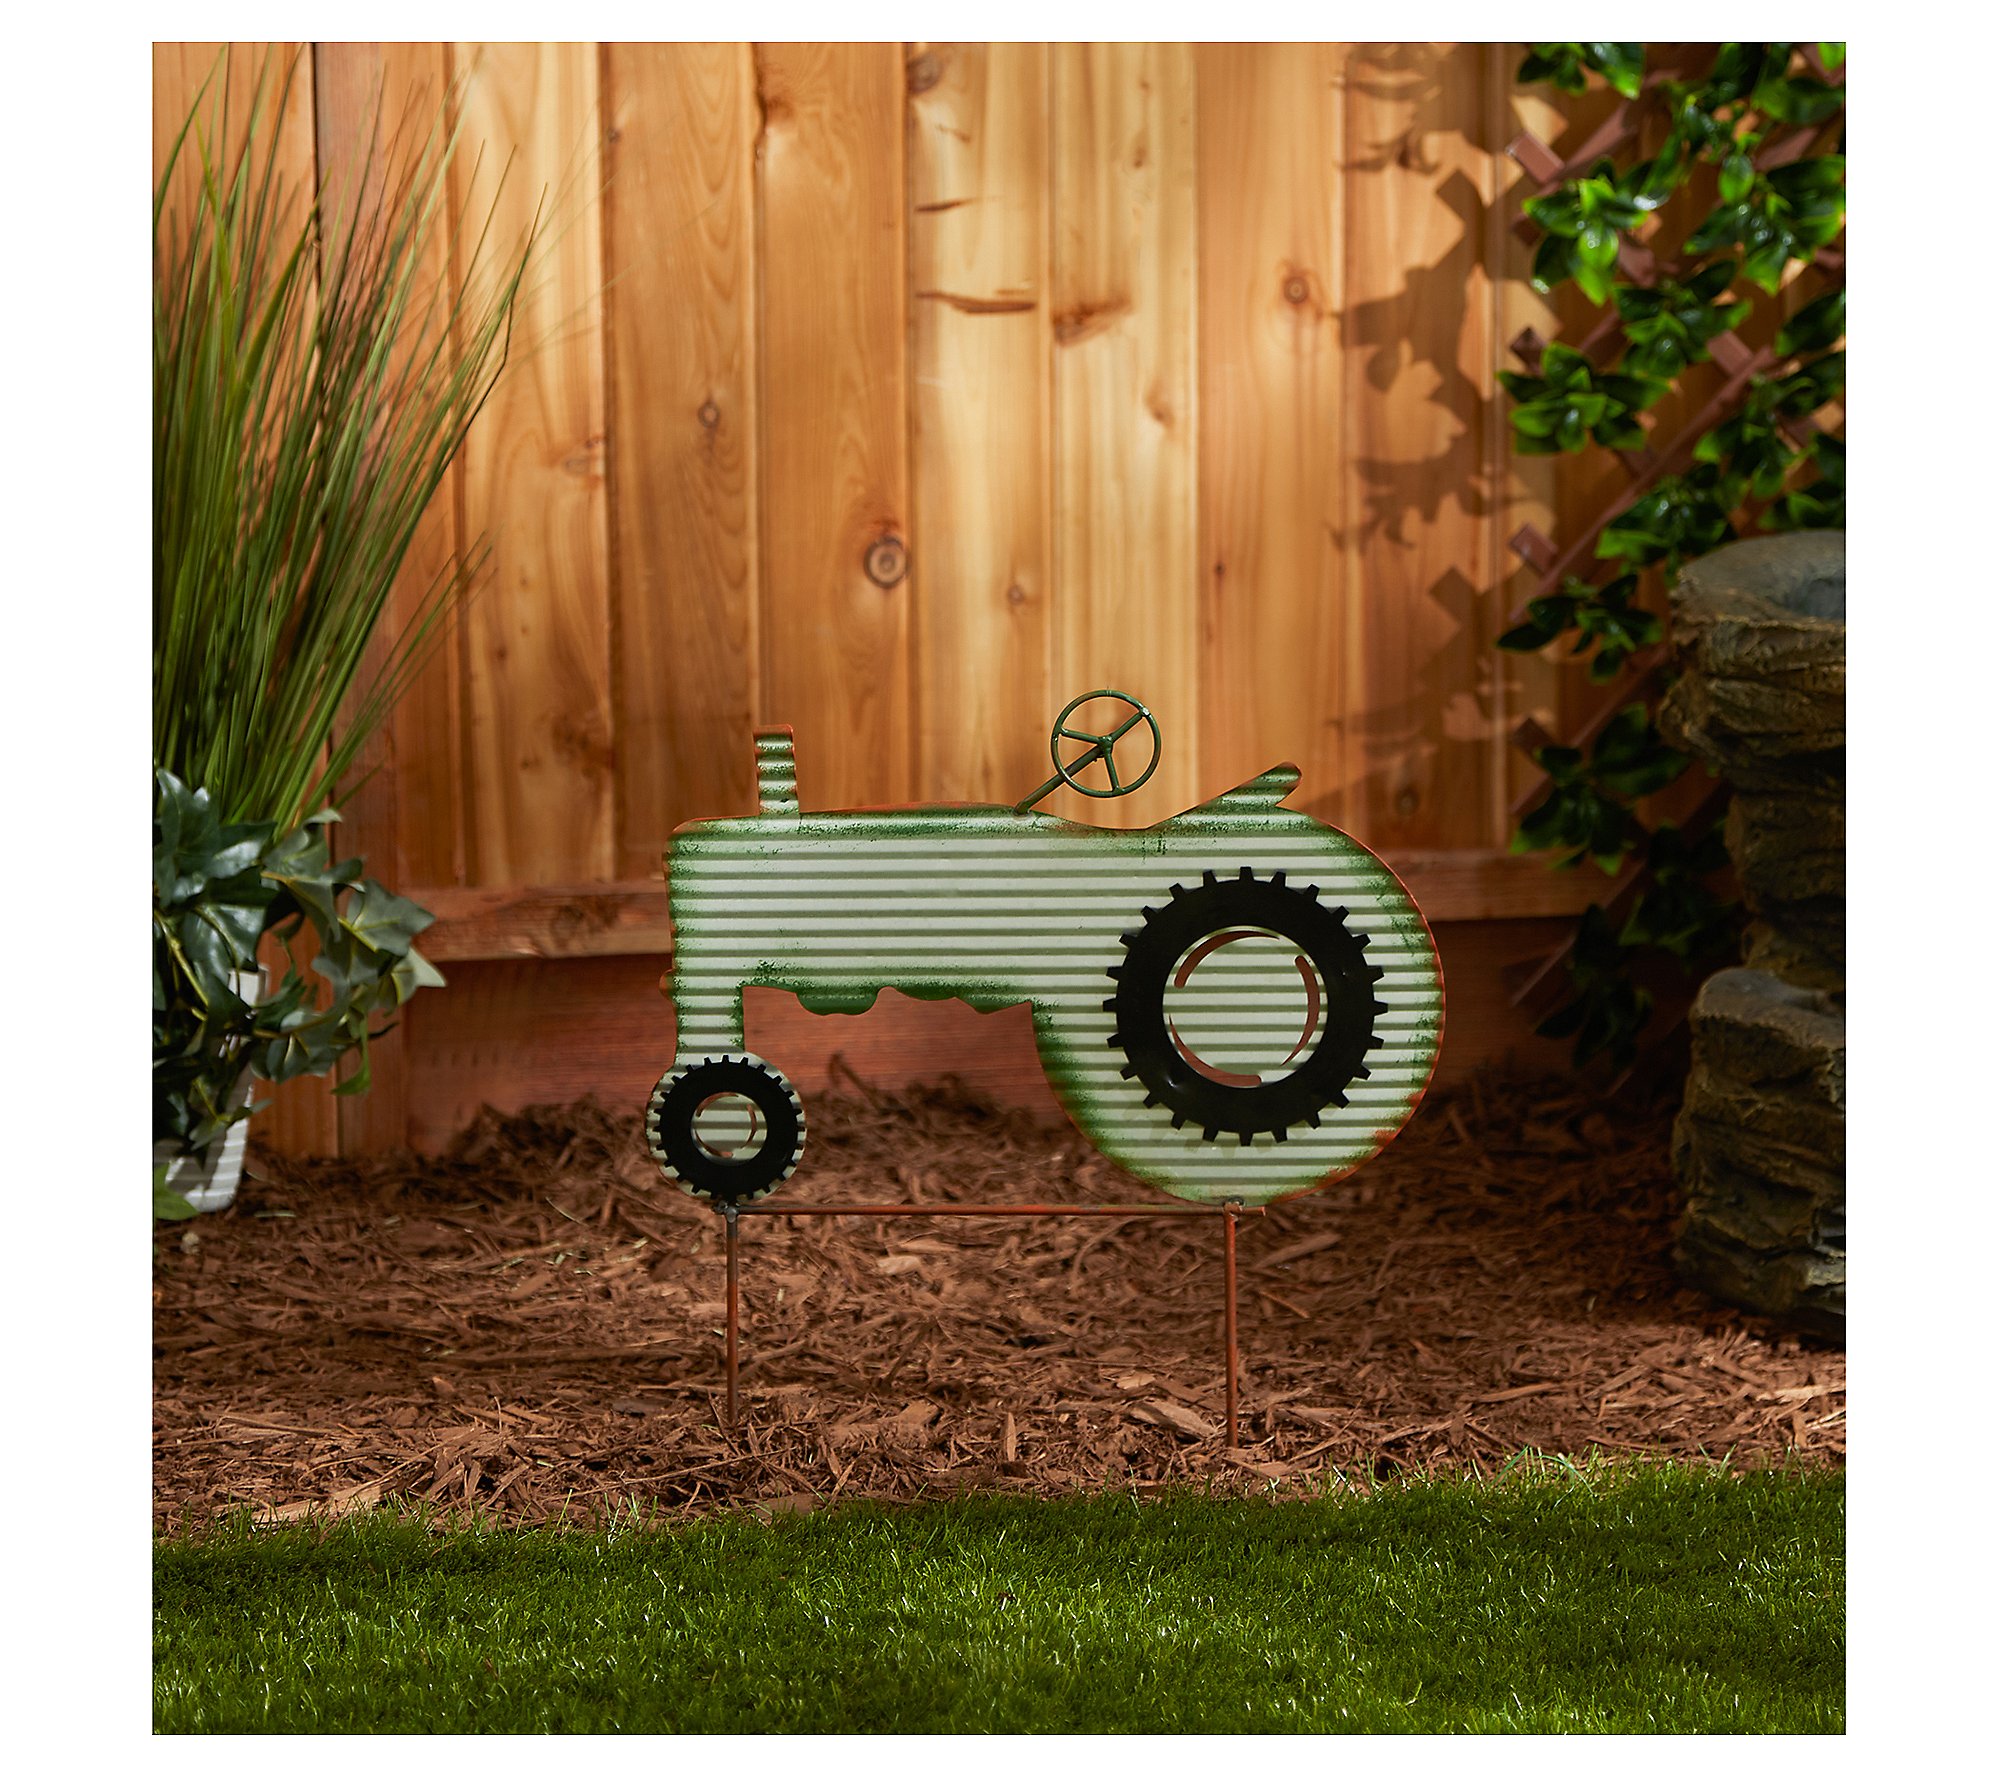 Design Imports Tractor Garden Stake